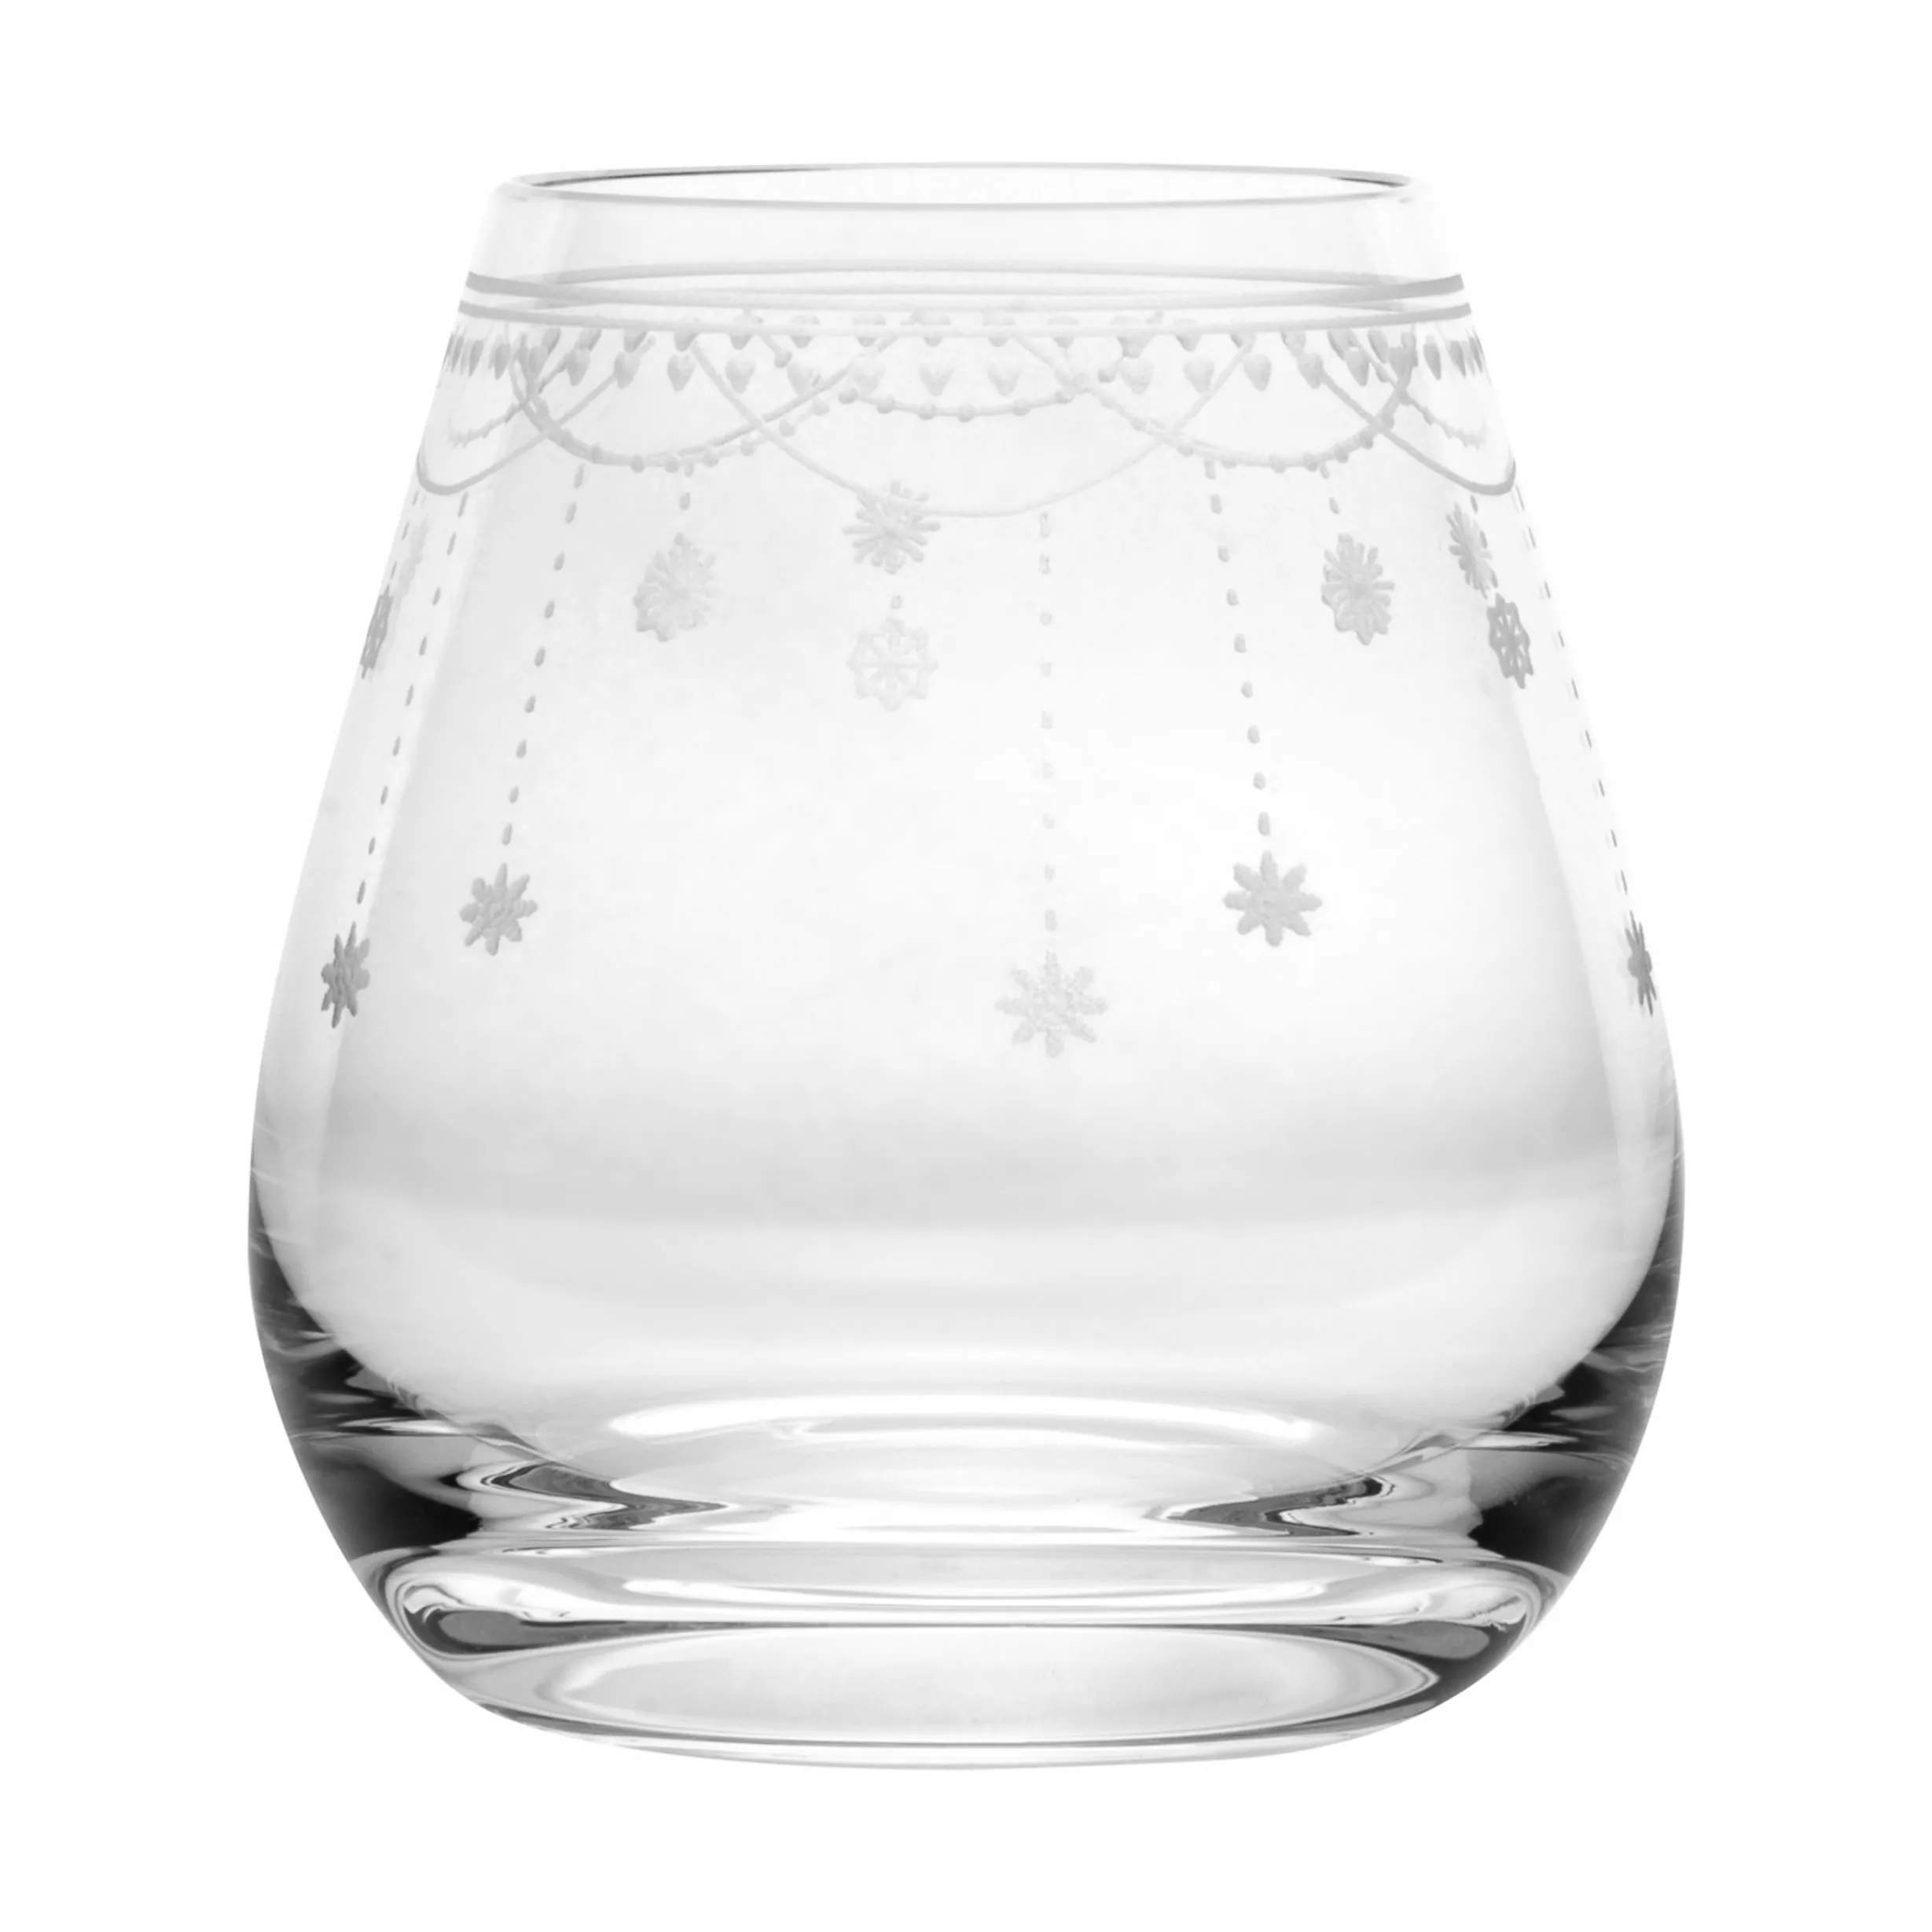 Wik & Walsøe vandglas Julemorgen Vandglas